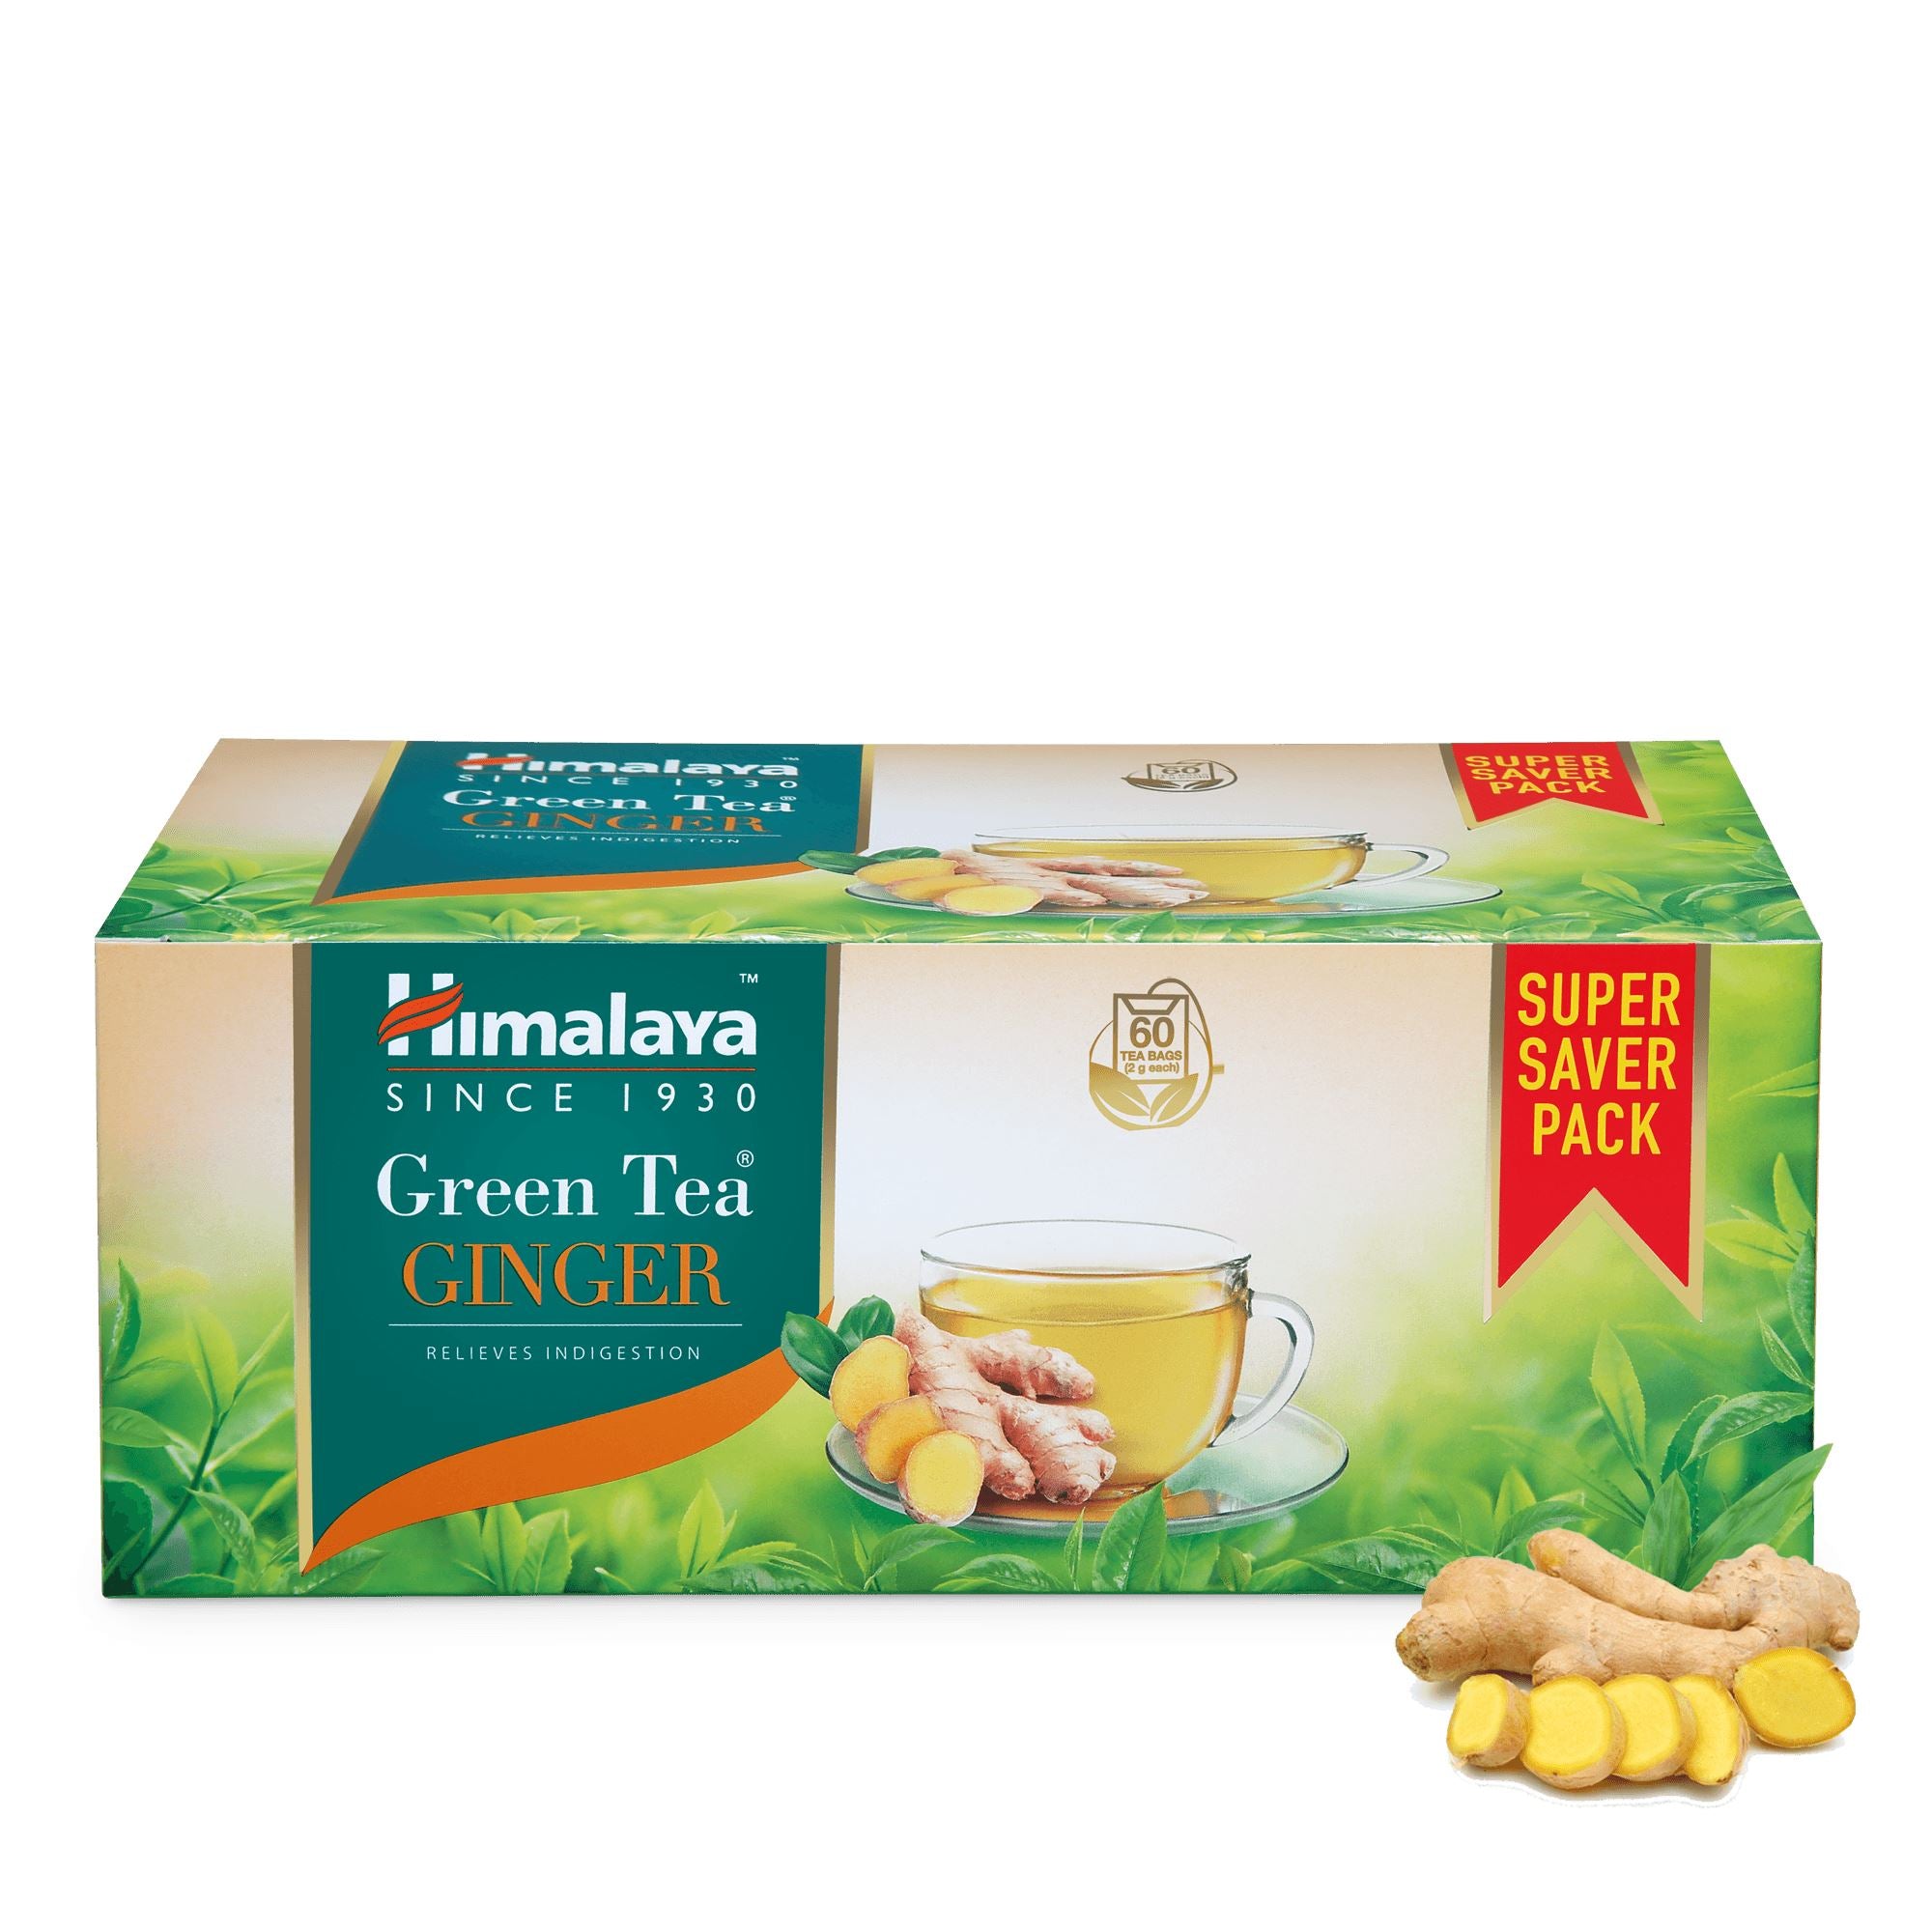 Himalaya Green Tea GINGER - Aids digestion and metabolism